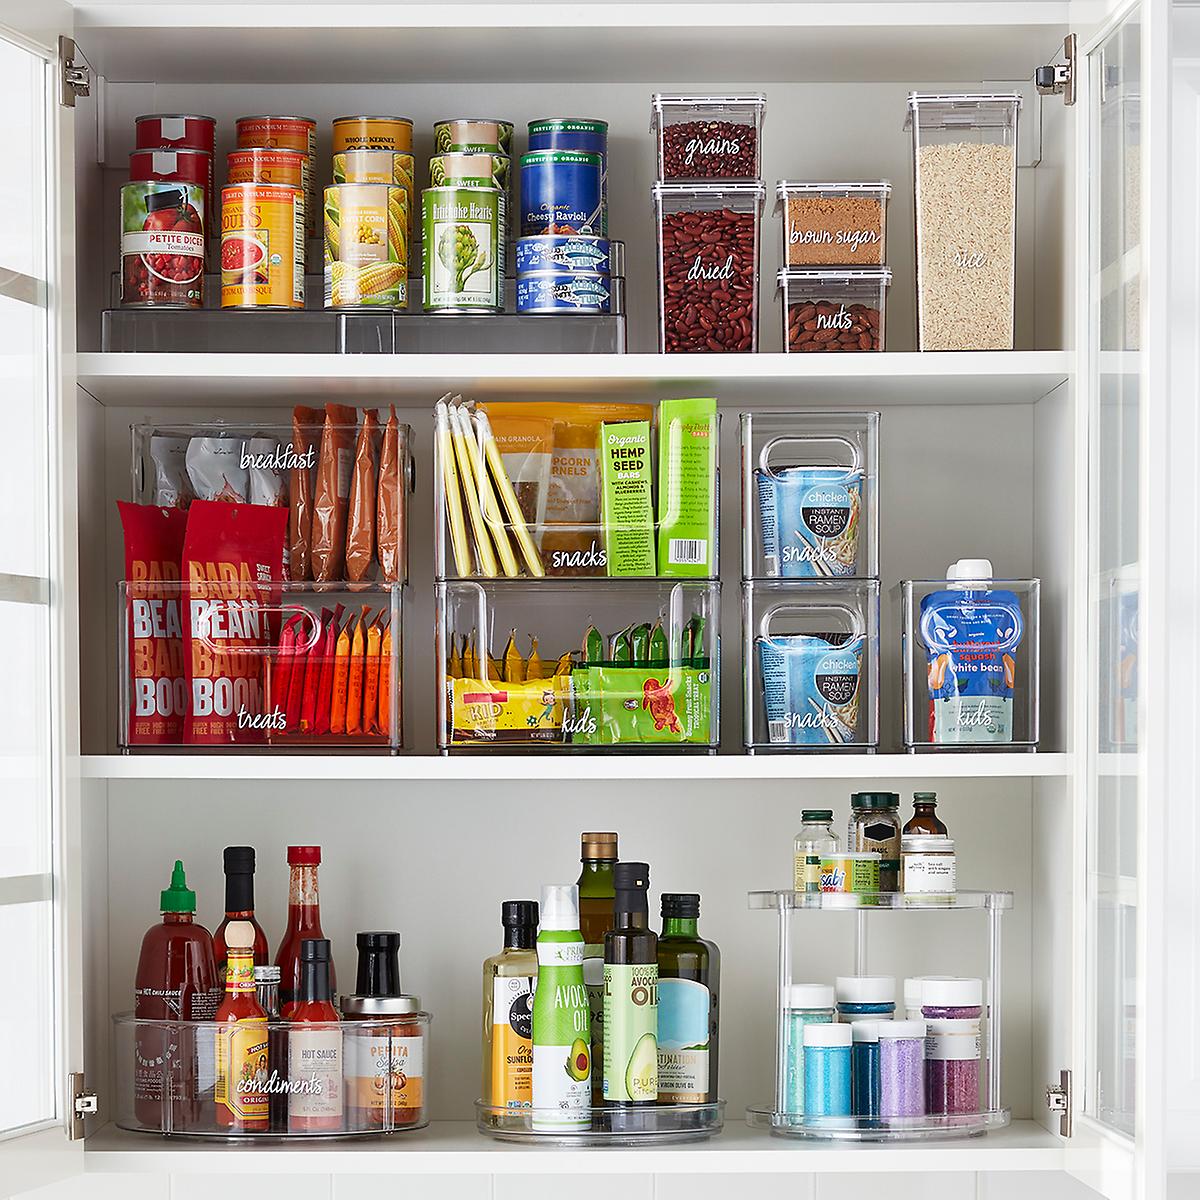 25 Snack Storage Ideas to Keep Your Stash Organized